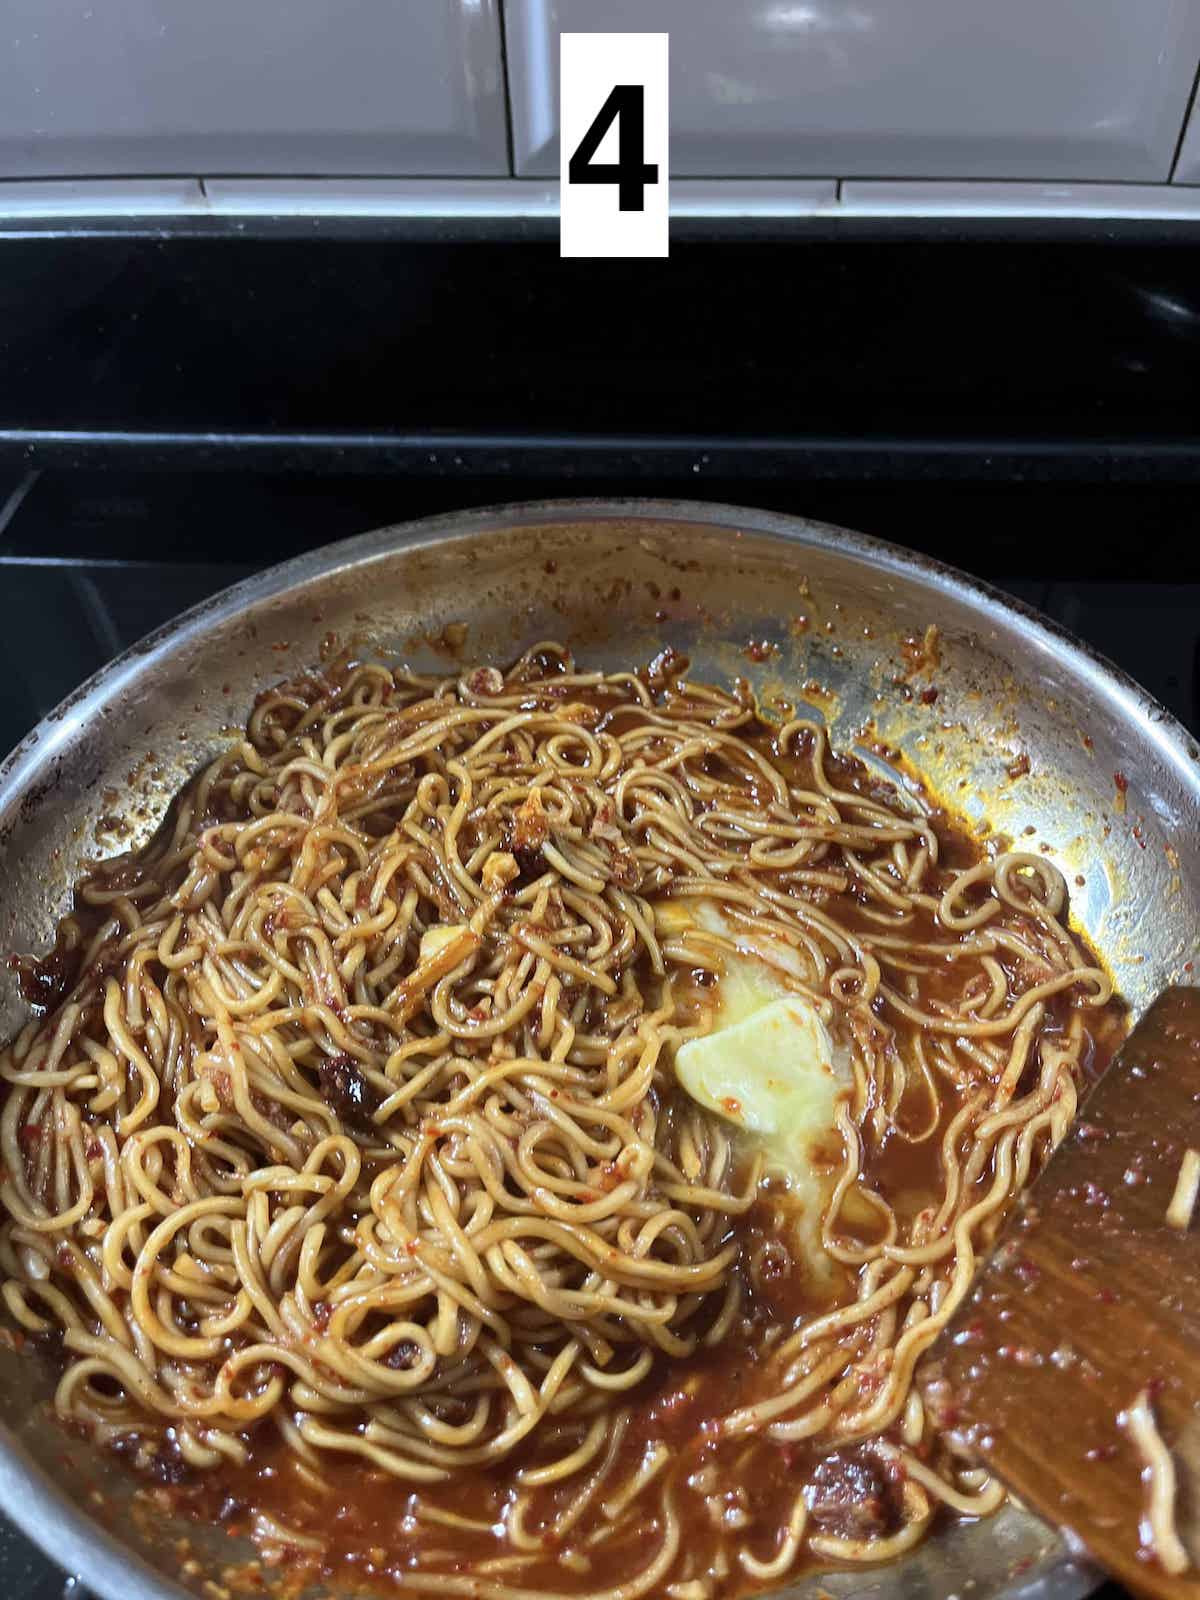 Butter melting into a pan of gochujang noodles.